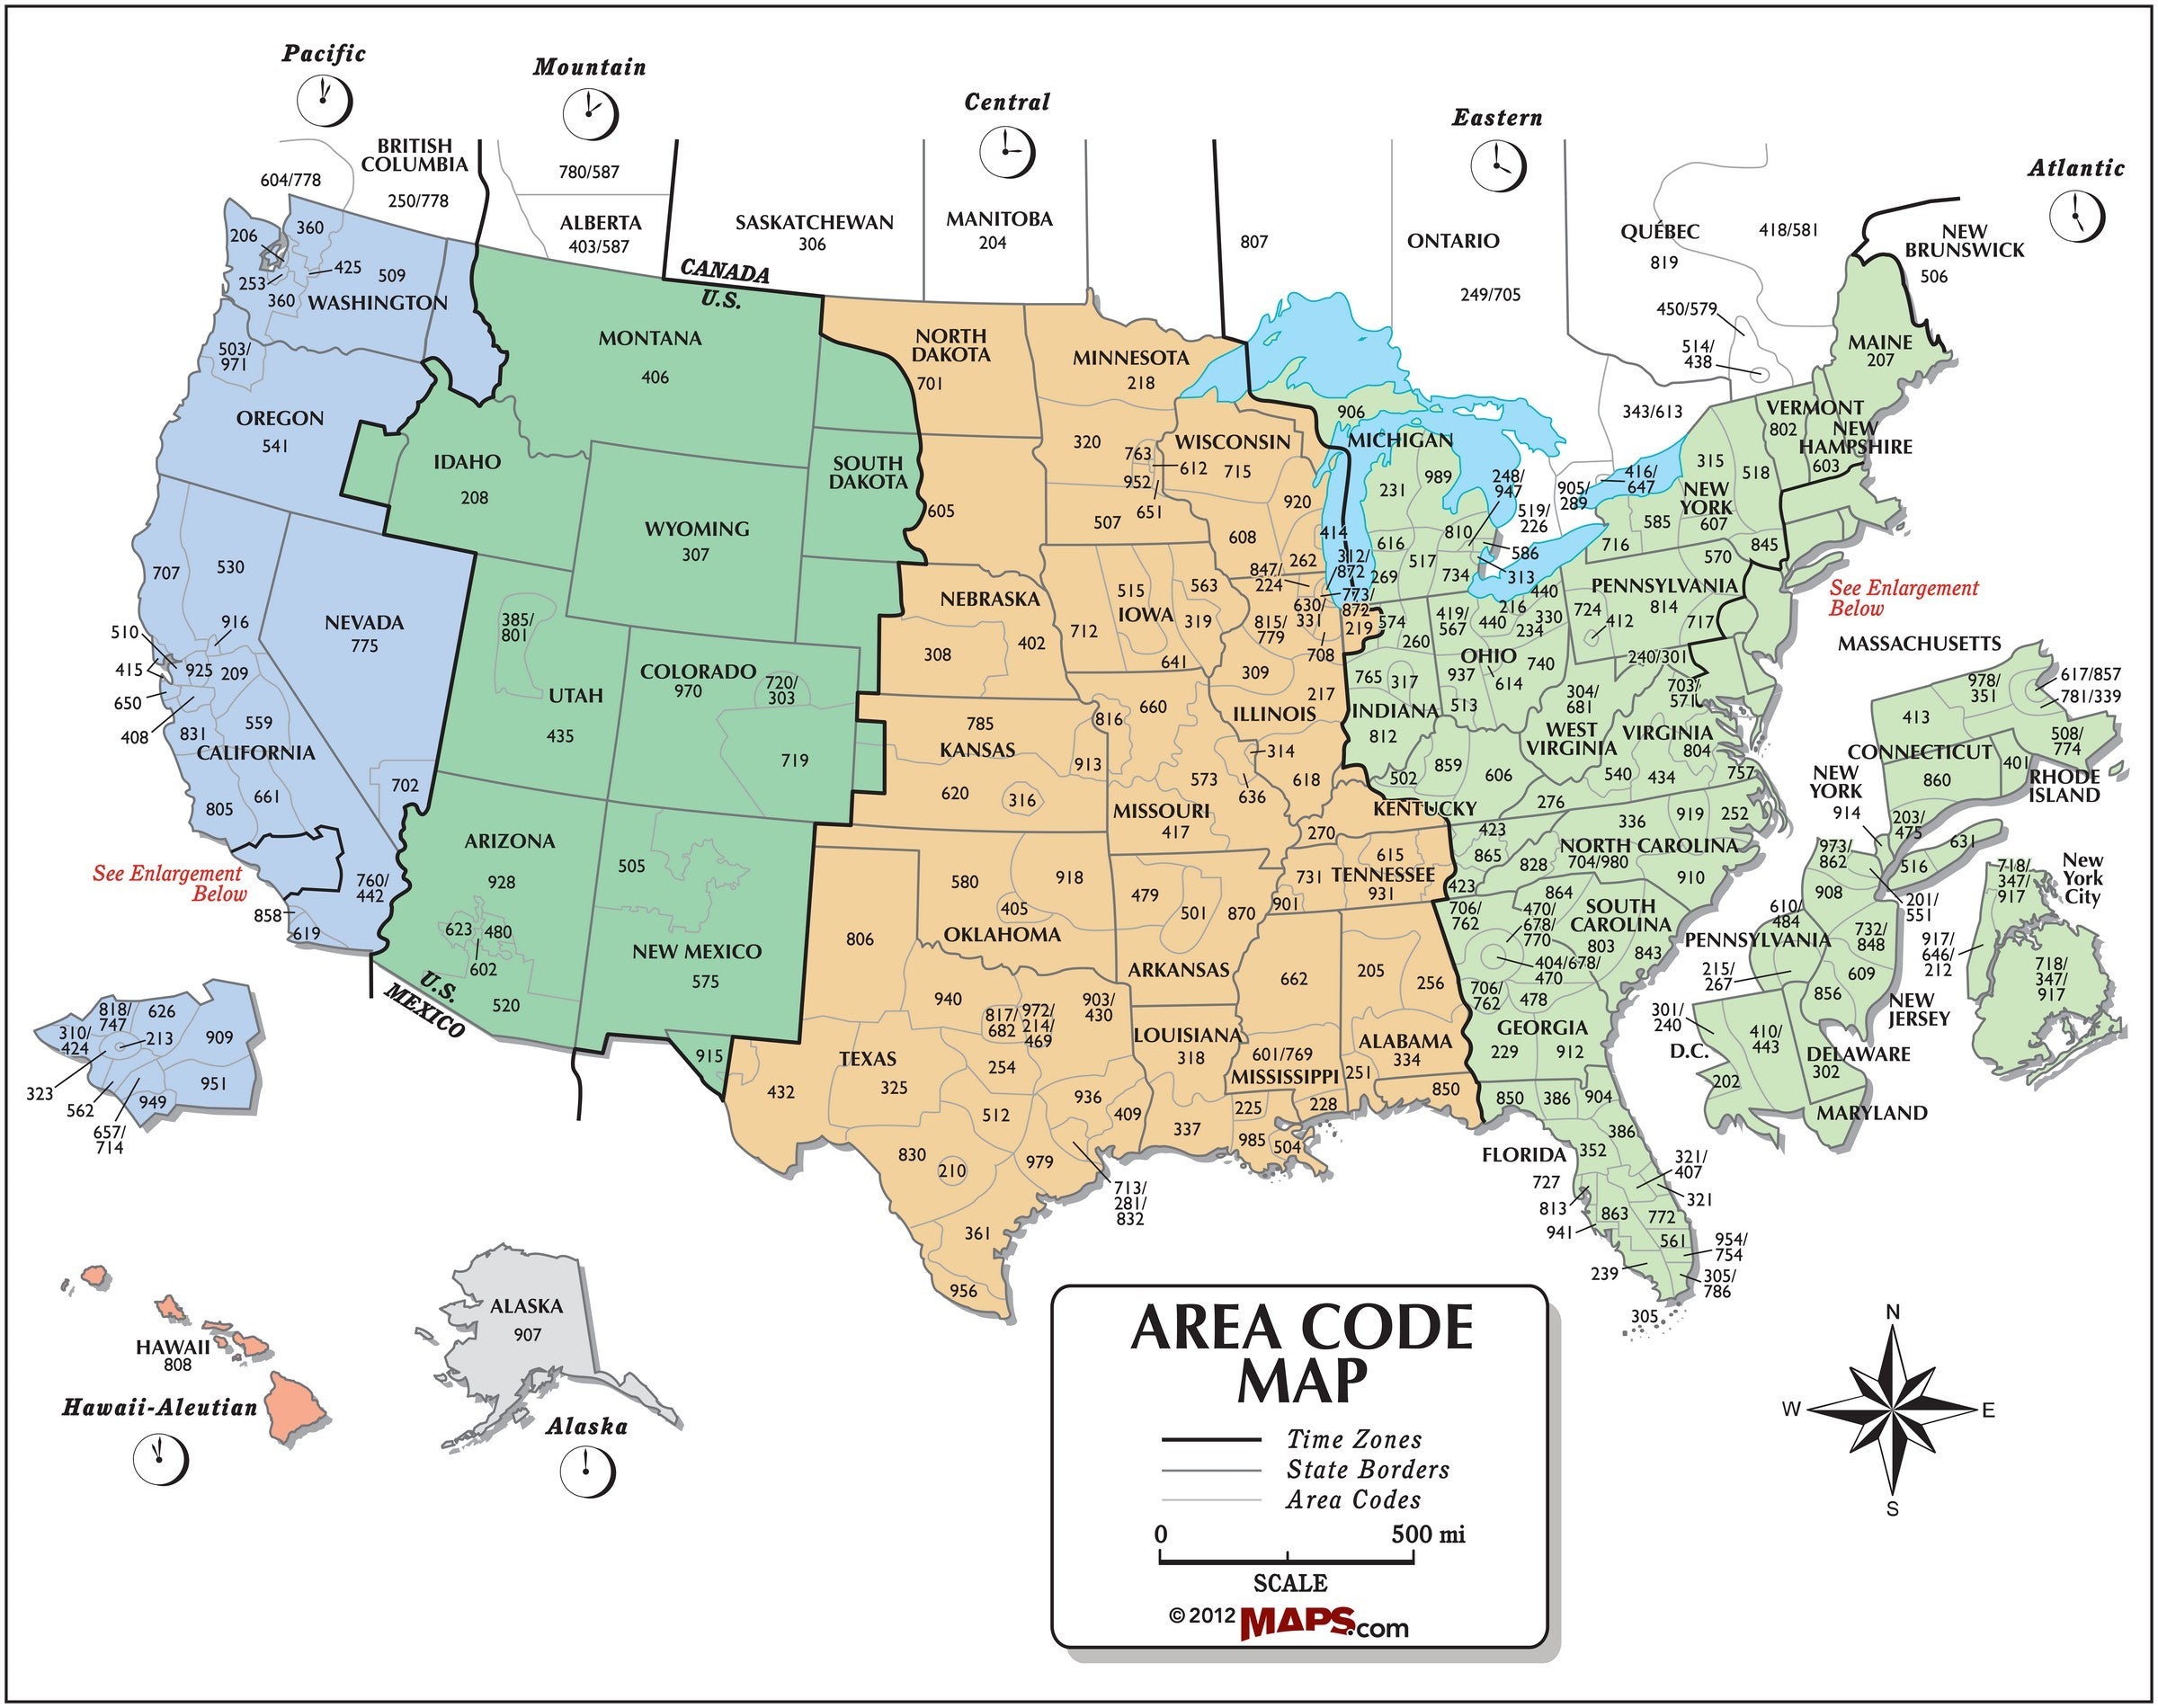 USA Area Code and Time Zone Wall Map | Maps.com.com